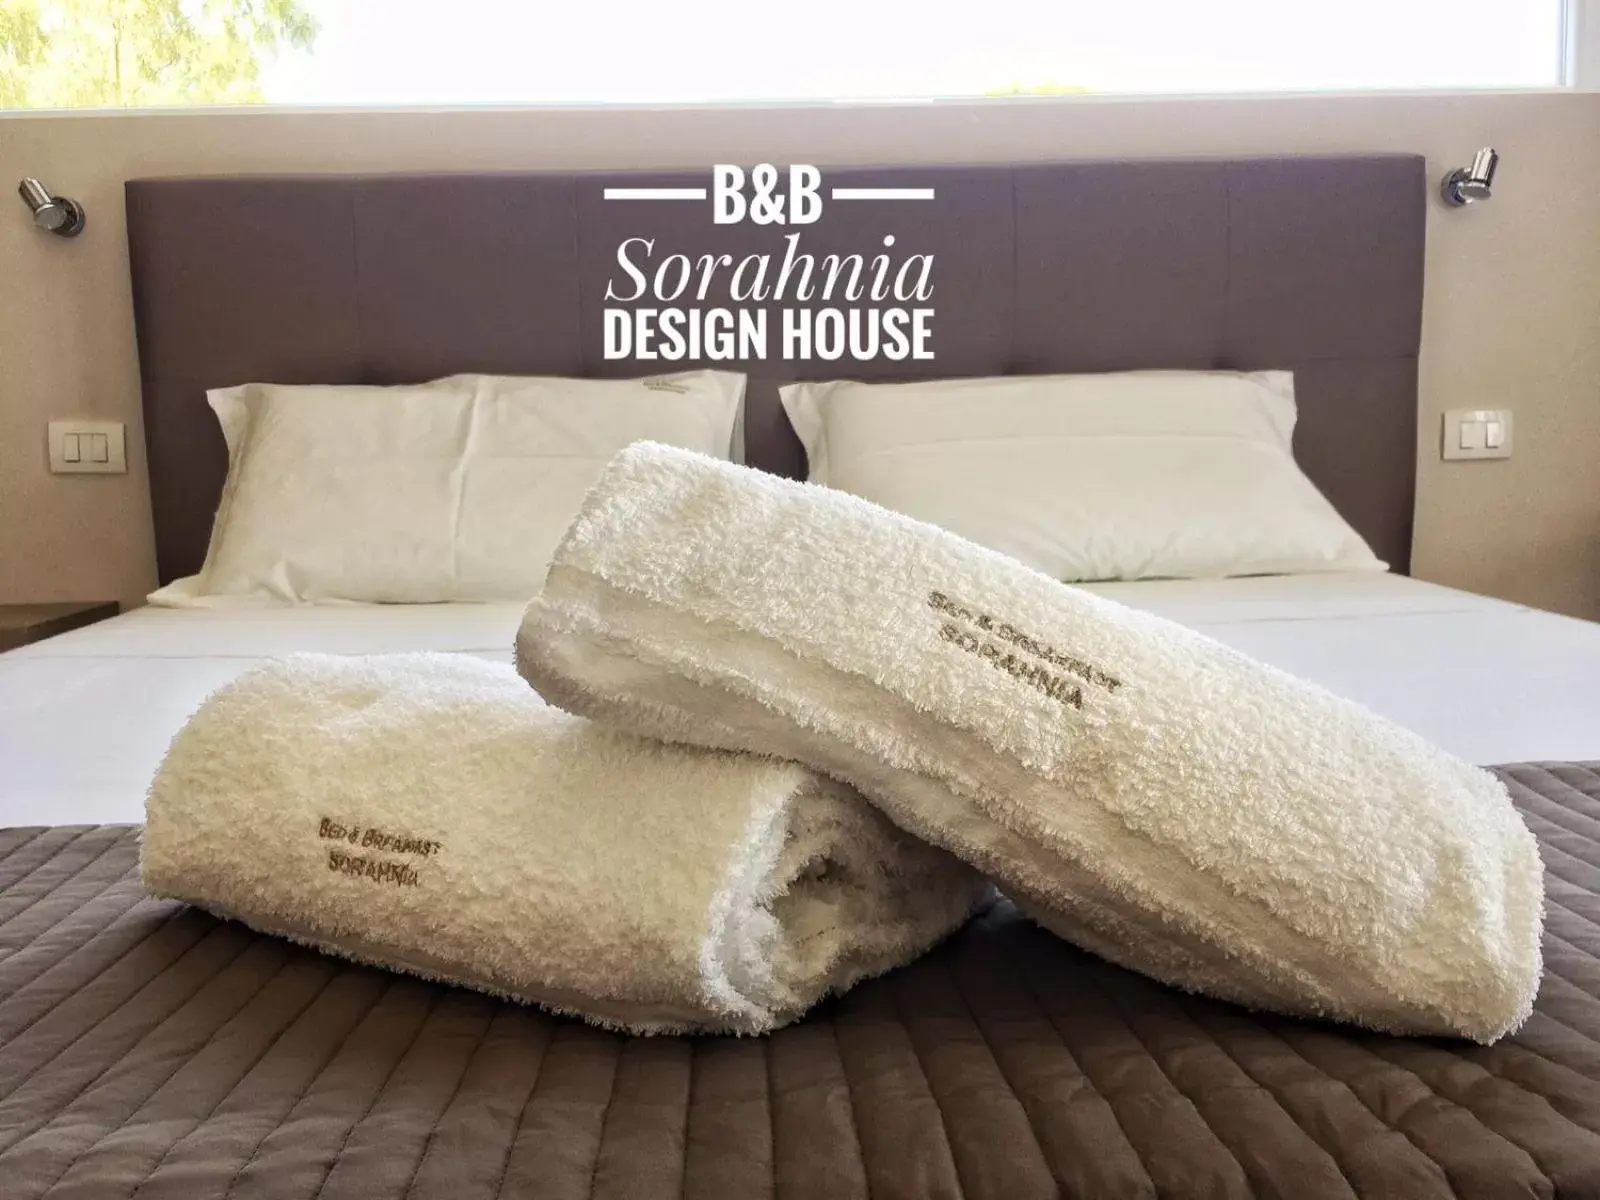 Bed in B&B Sorahnia - Design House